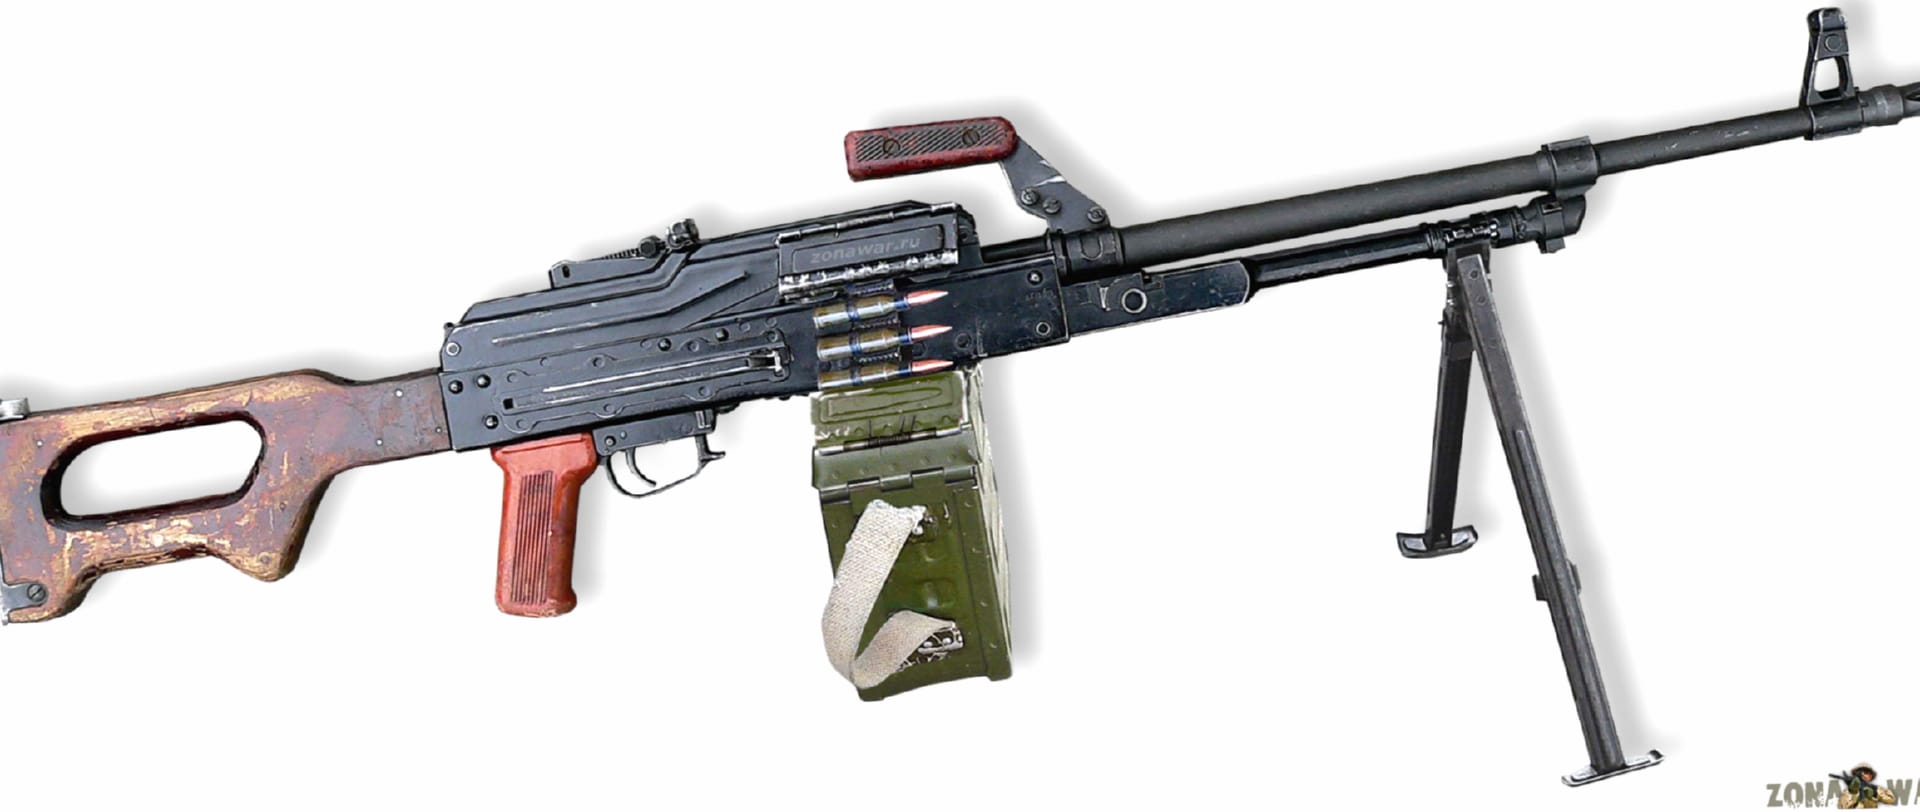 Kalashnikov Pk Rifle at 2048 x 2048 iPad size wallpapers HD quality